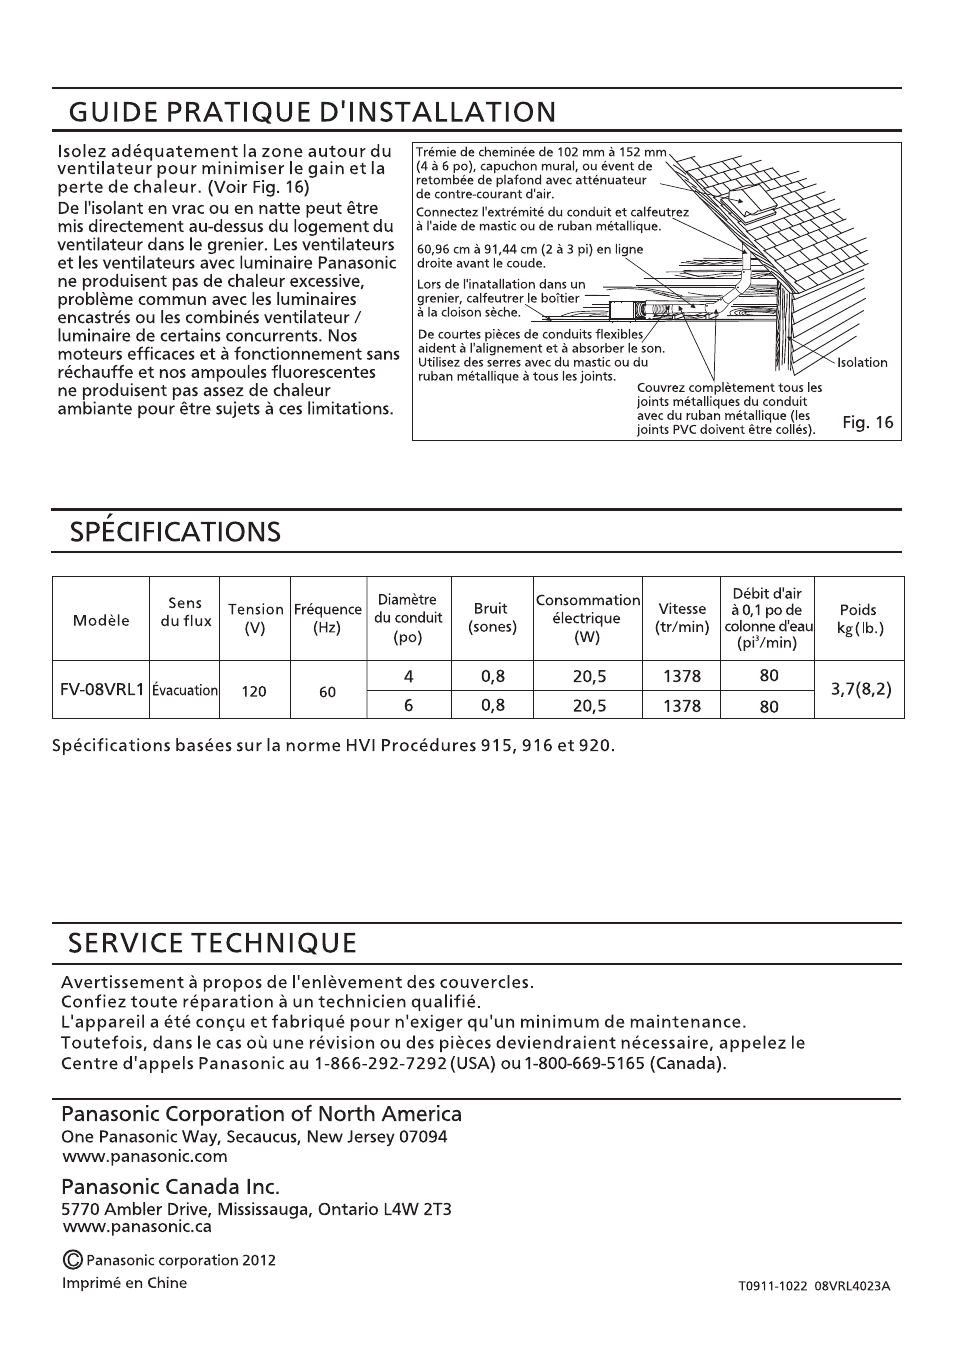 Guide pratique d'installation, Specifications, Service technique | Panasonic canada inc, Panasonic corporation of north america | Panasonic FV-08VRL1 Manuel d'utilisation | Page 8 / 8